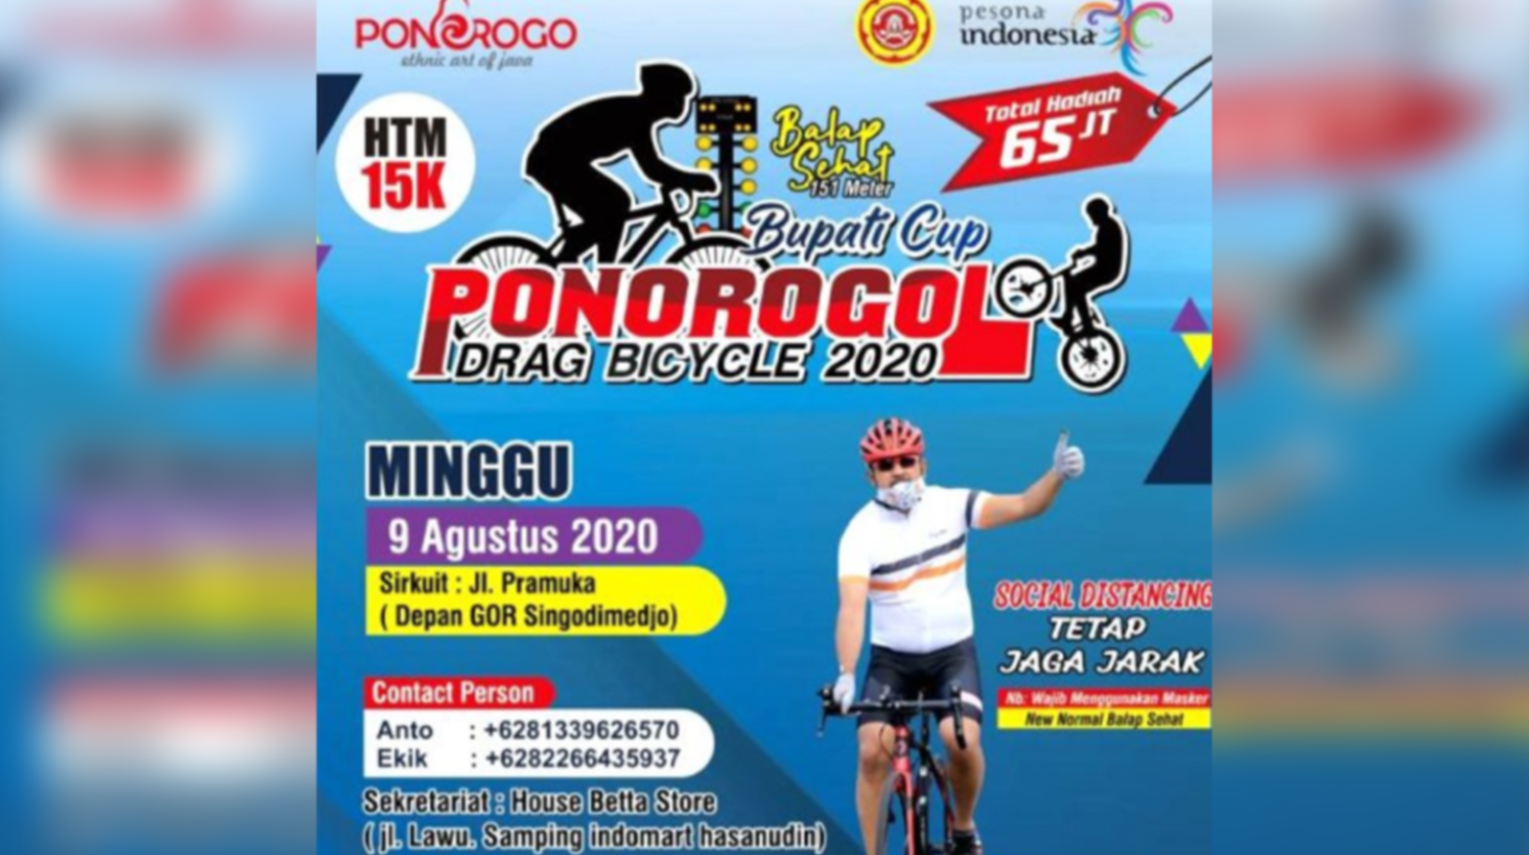 Poster Bupati Cup Ponorogo Drag Bicycle 2020. (Foto: Istimewa)